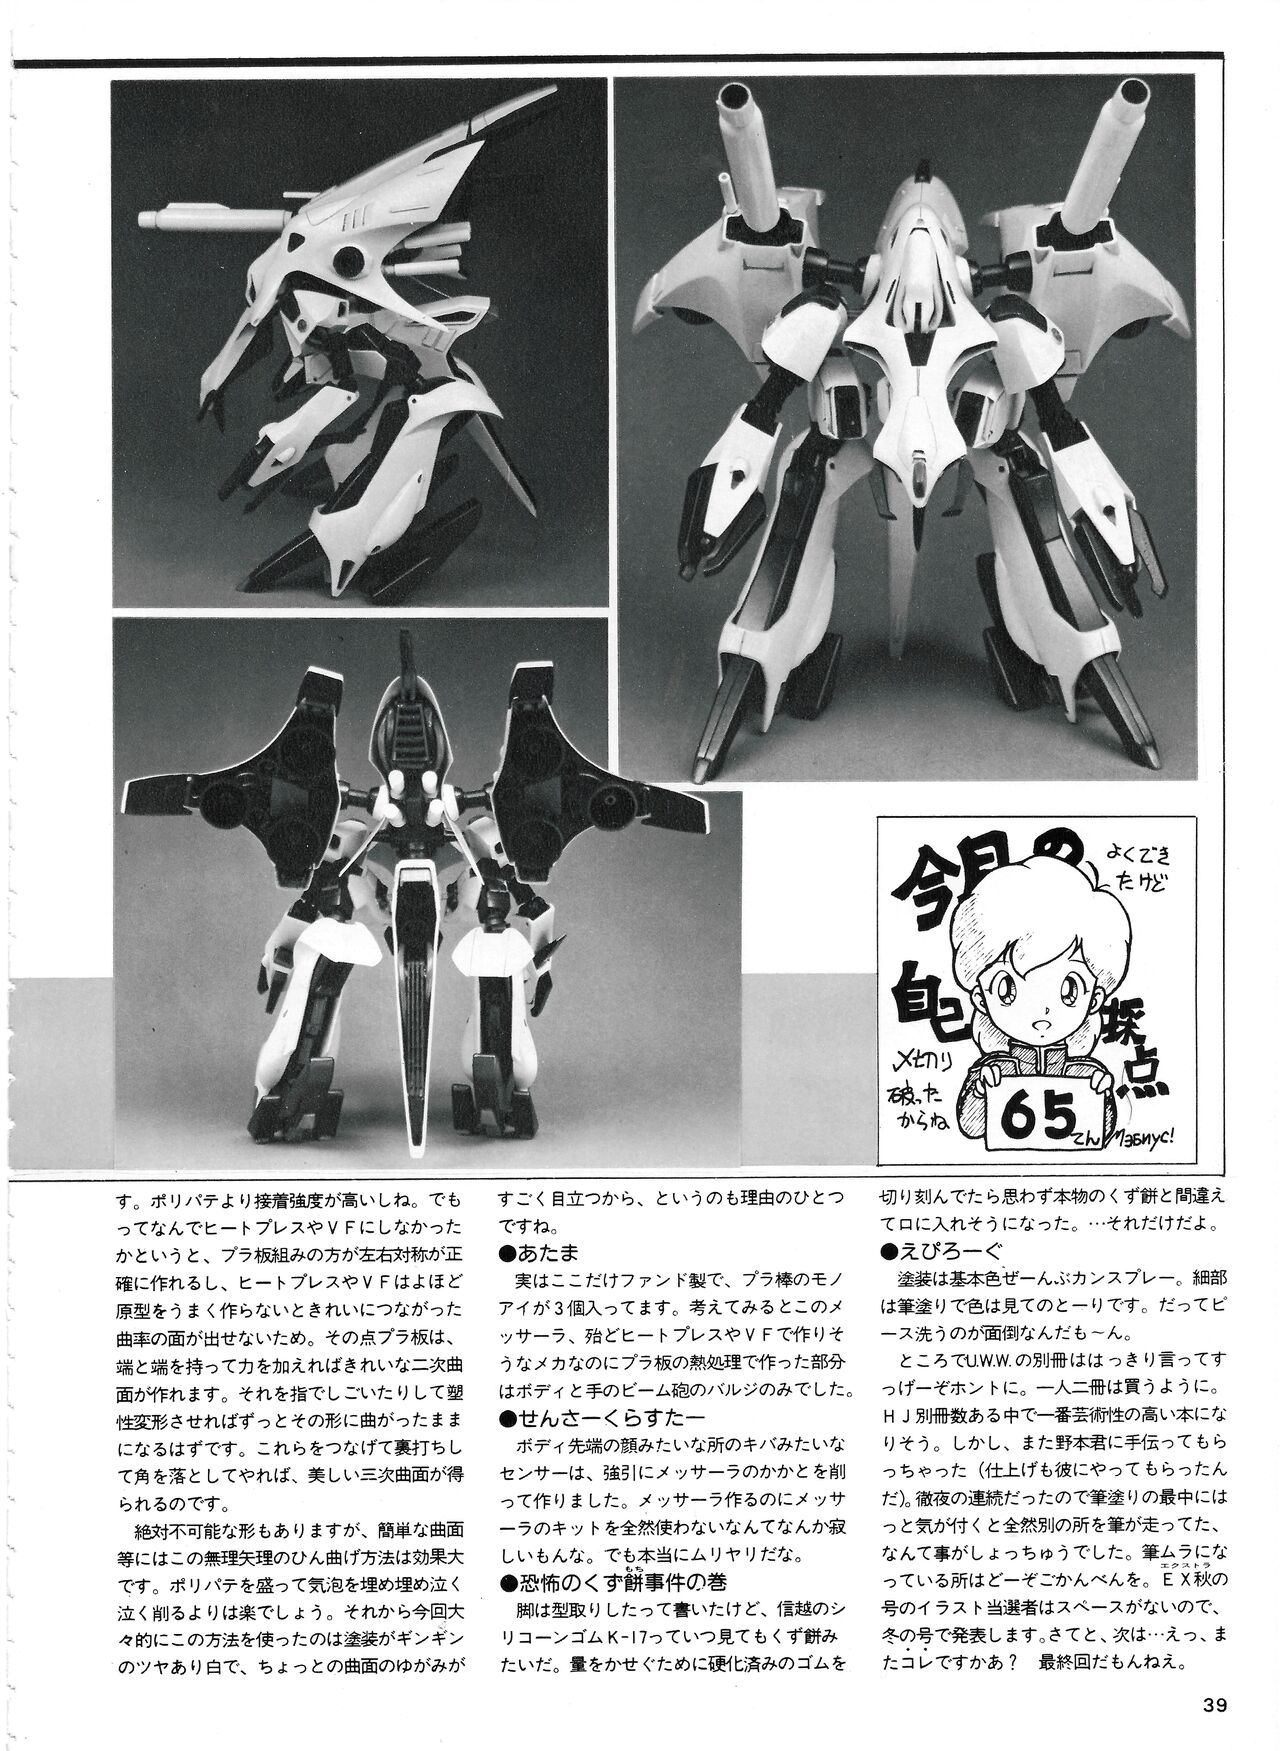 Hobby Japan Magazine 1988 Issue No.224 38